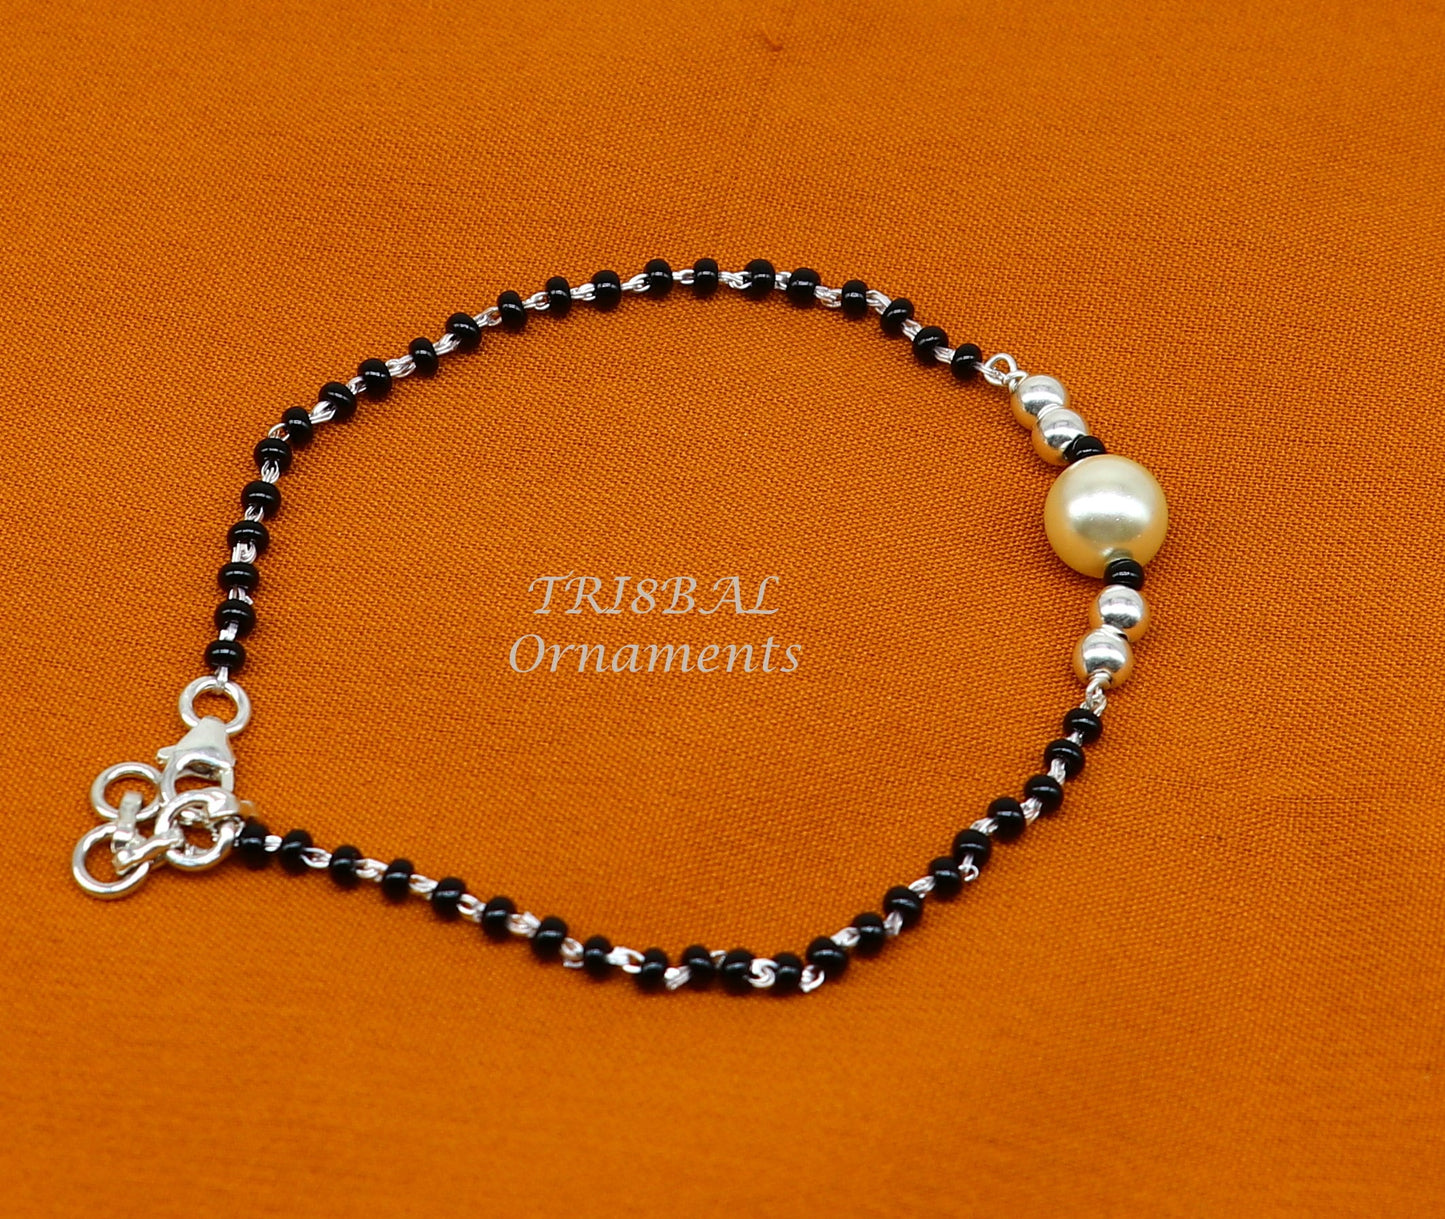 All sizes 925 sterling silver customized black beads Nazariya bracelet use as an anklets Best girl's bracelet stylish jewelry india sbr457 - TRIBAL ORNAMENTS